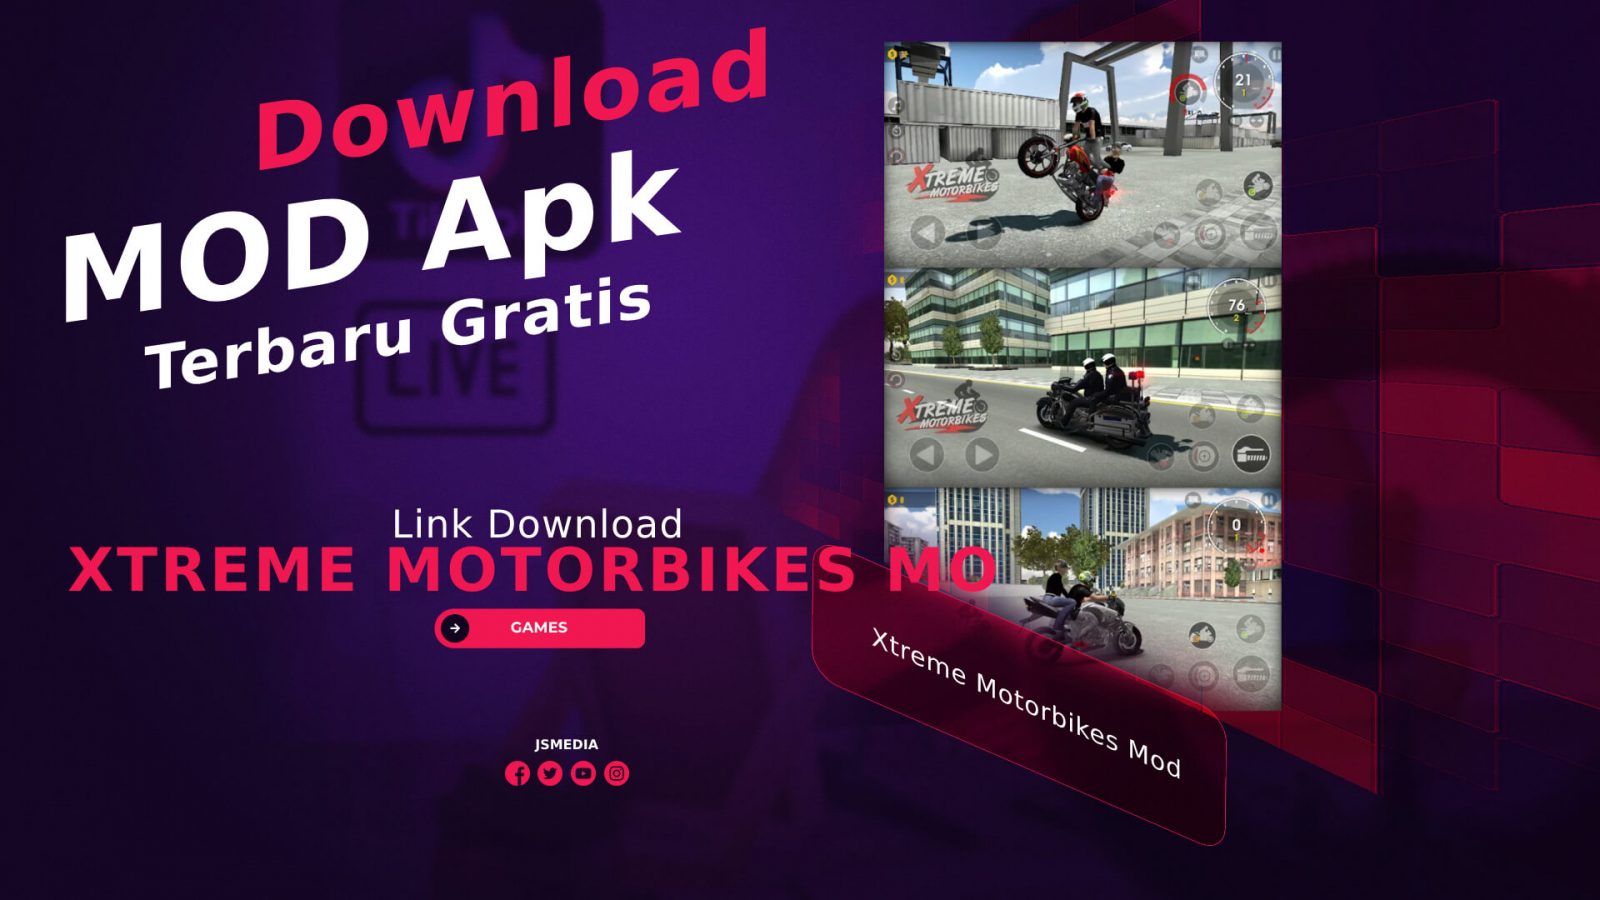 Link Download Xtreme Motorbikes Mod Apk Terbaru 2021